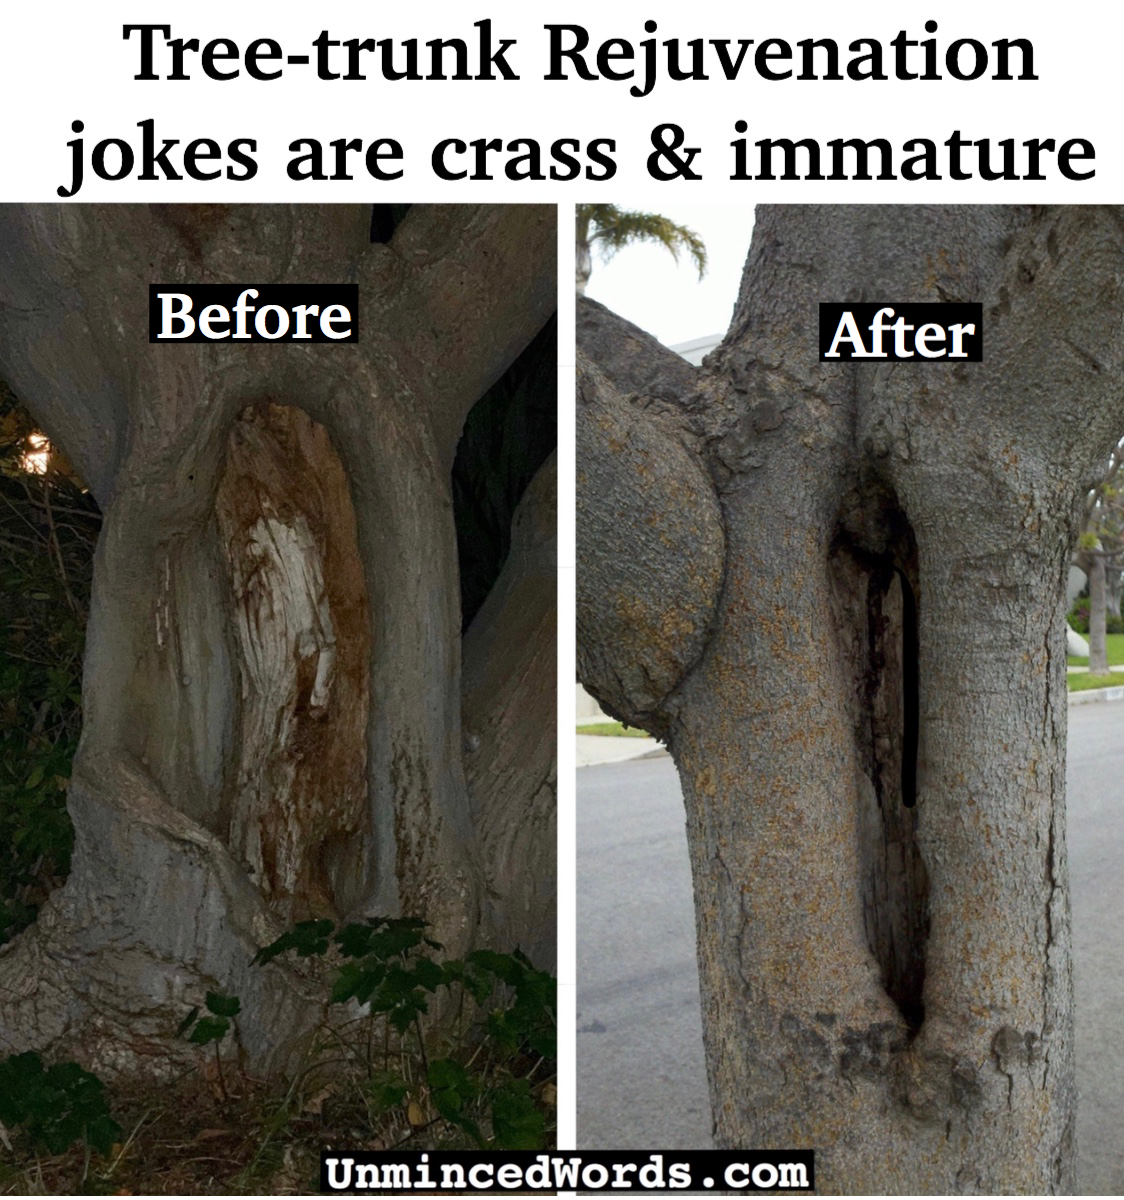 Tree-trunk Rejuvenation jokes are crass and immature